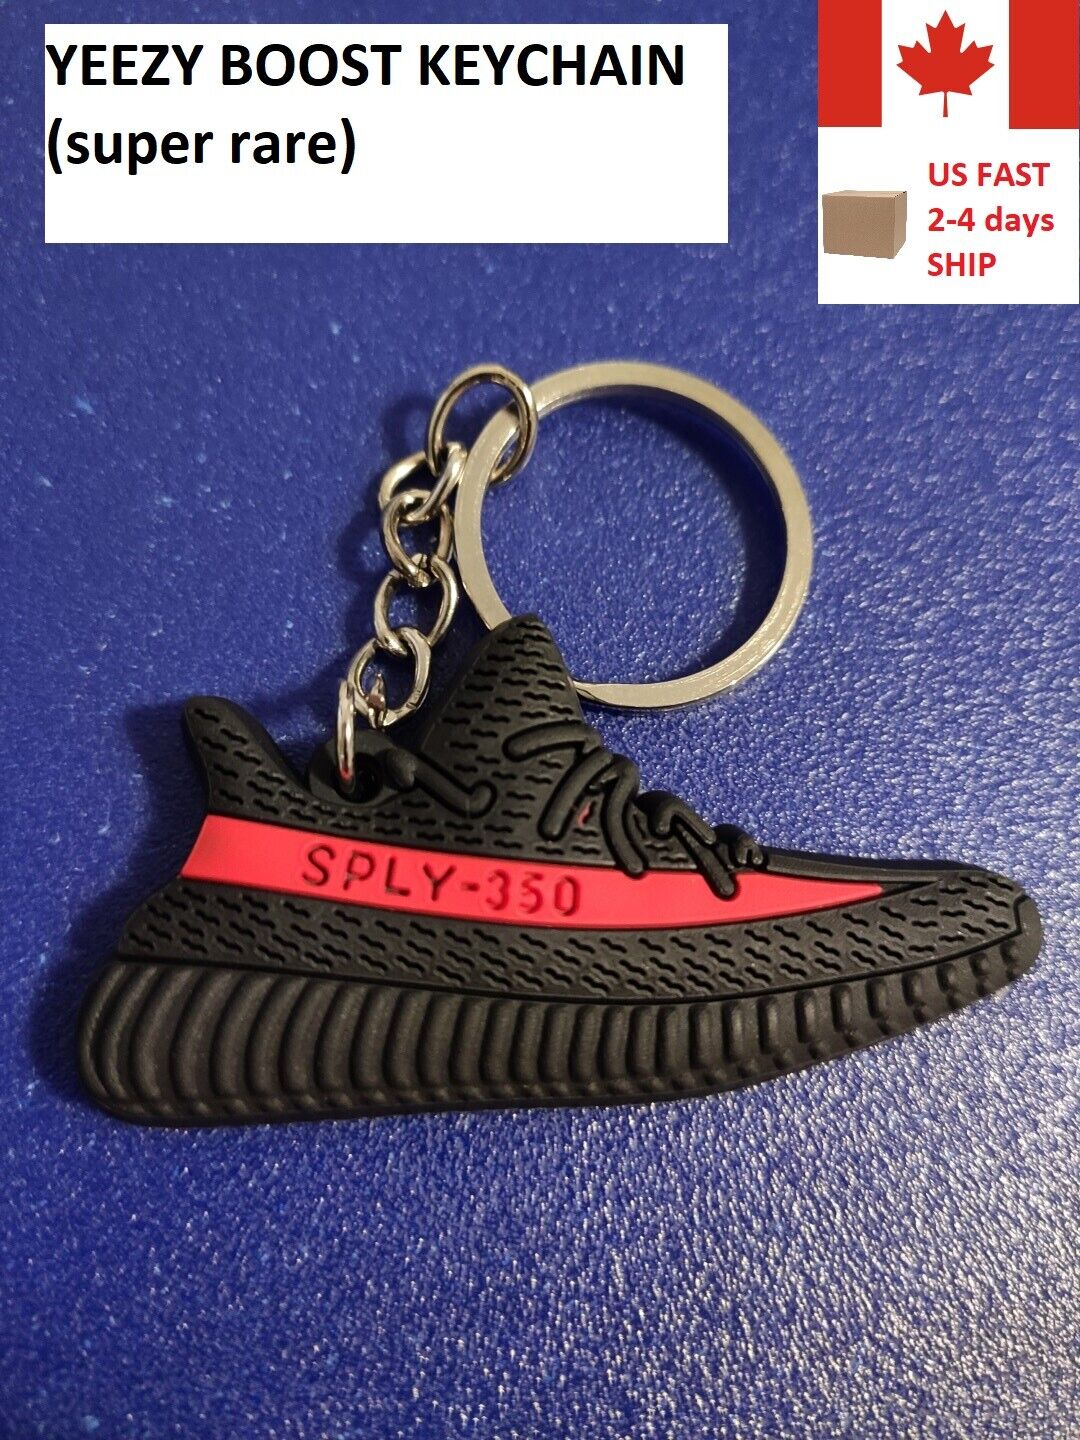 YEEZY BOOST KEYCHAIN - 350 V2 - Cute Mini Sneaker Gift Cool 2020 - Fast Ship!